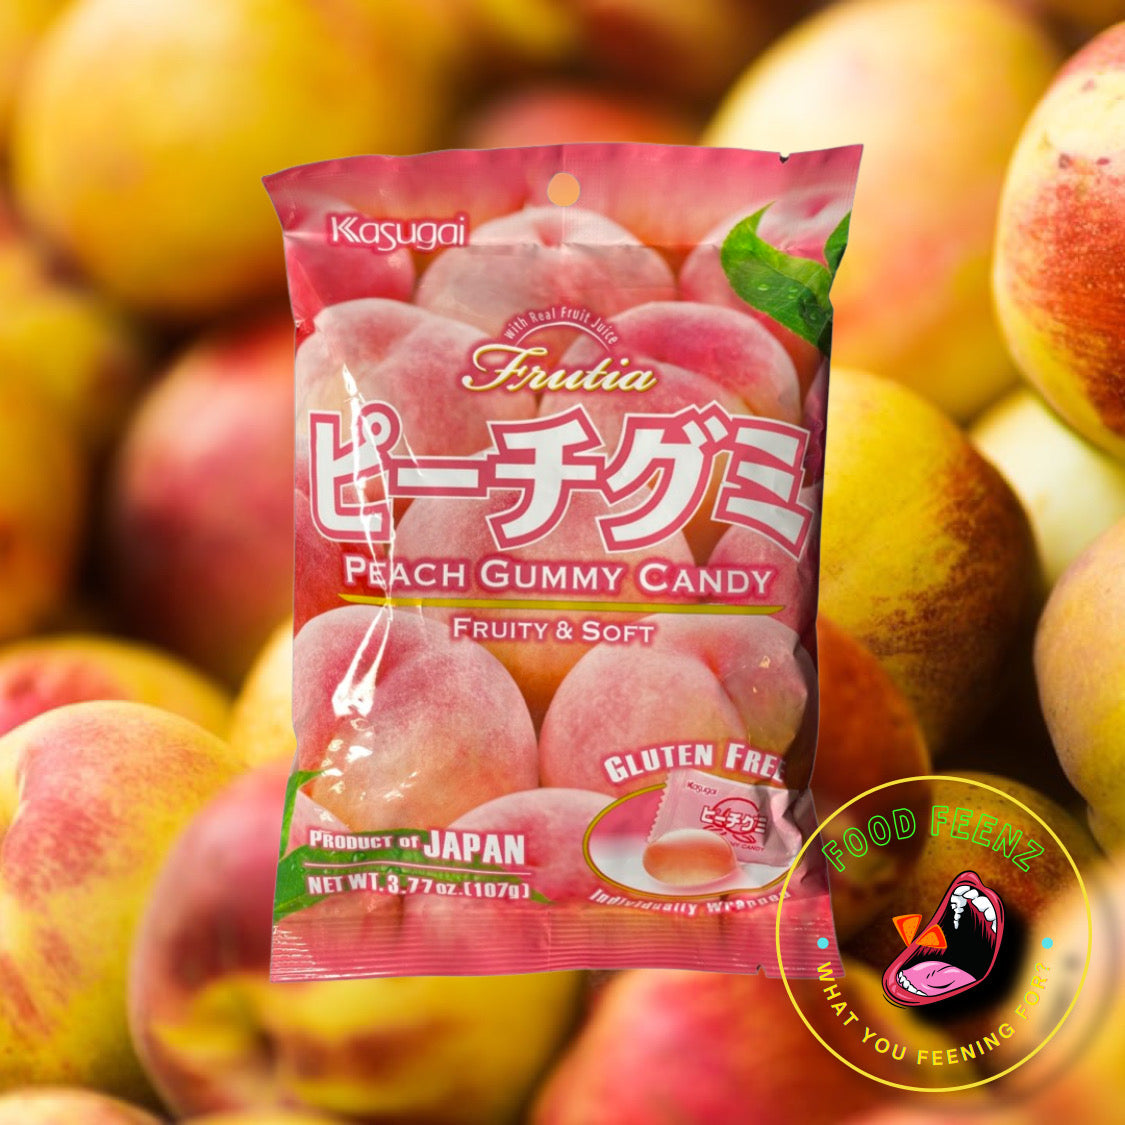 Kasugai Peach Gummy Candy (Japan)